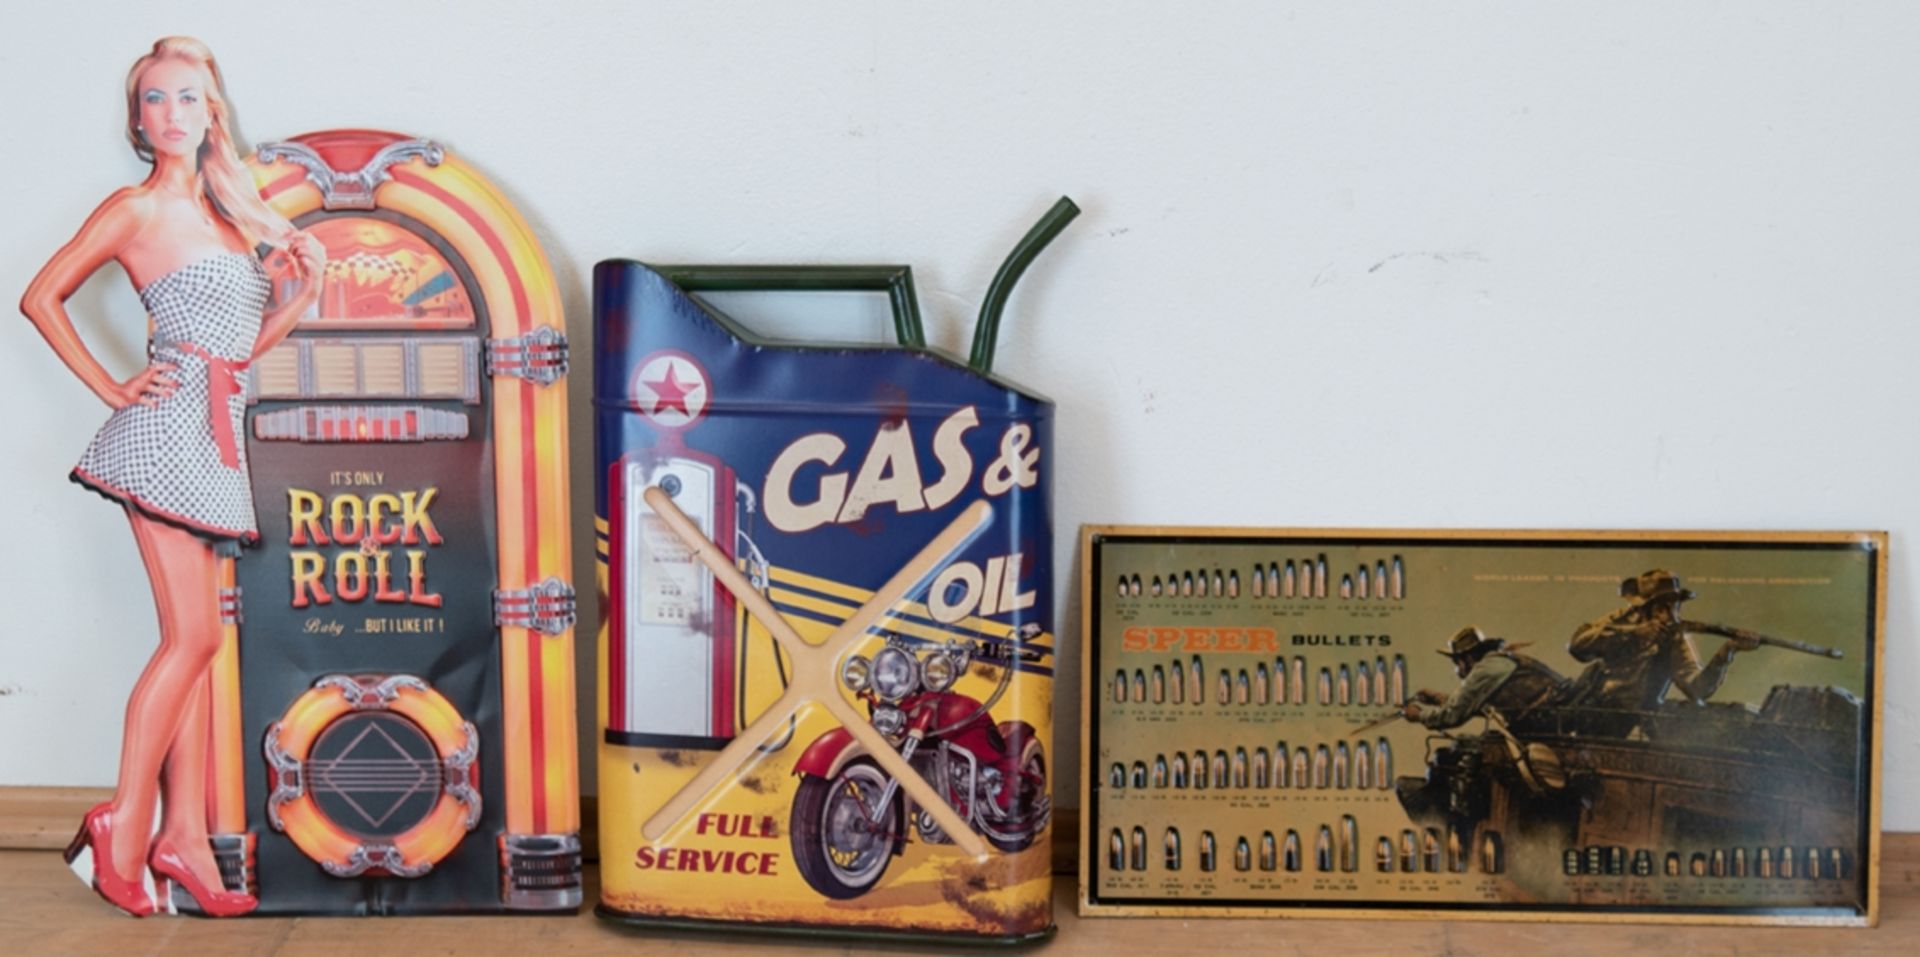 3 Reklameschilder, dabei "Speer Bullets", Blech, 26,5x54 cm, mit 4 Befestigungslöcher, "Gas &Oil-Fu